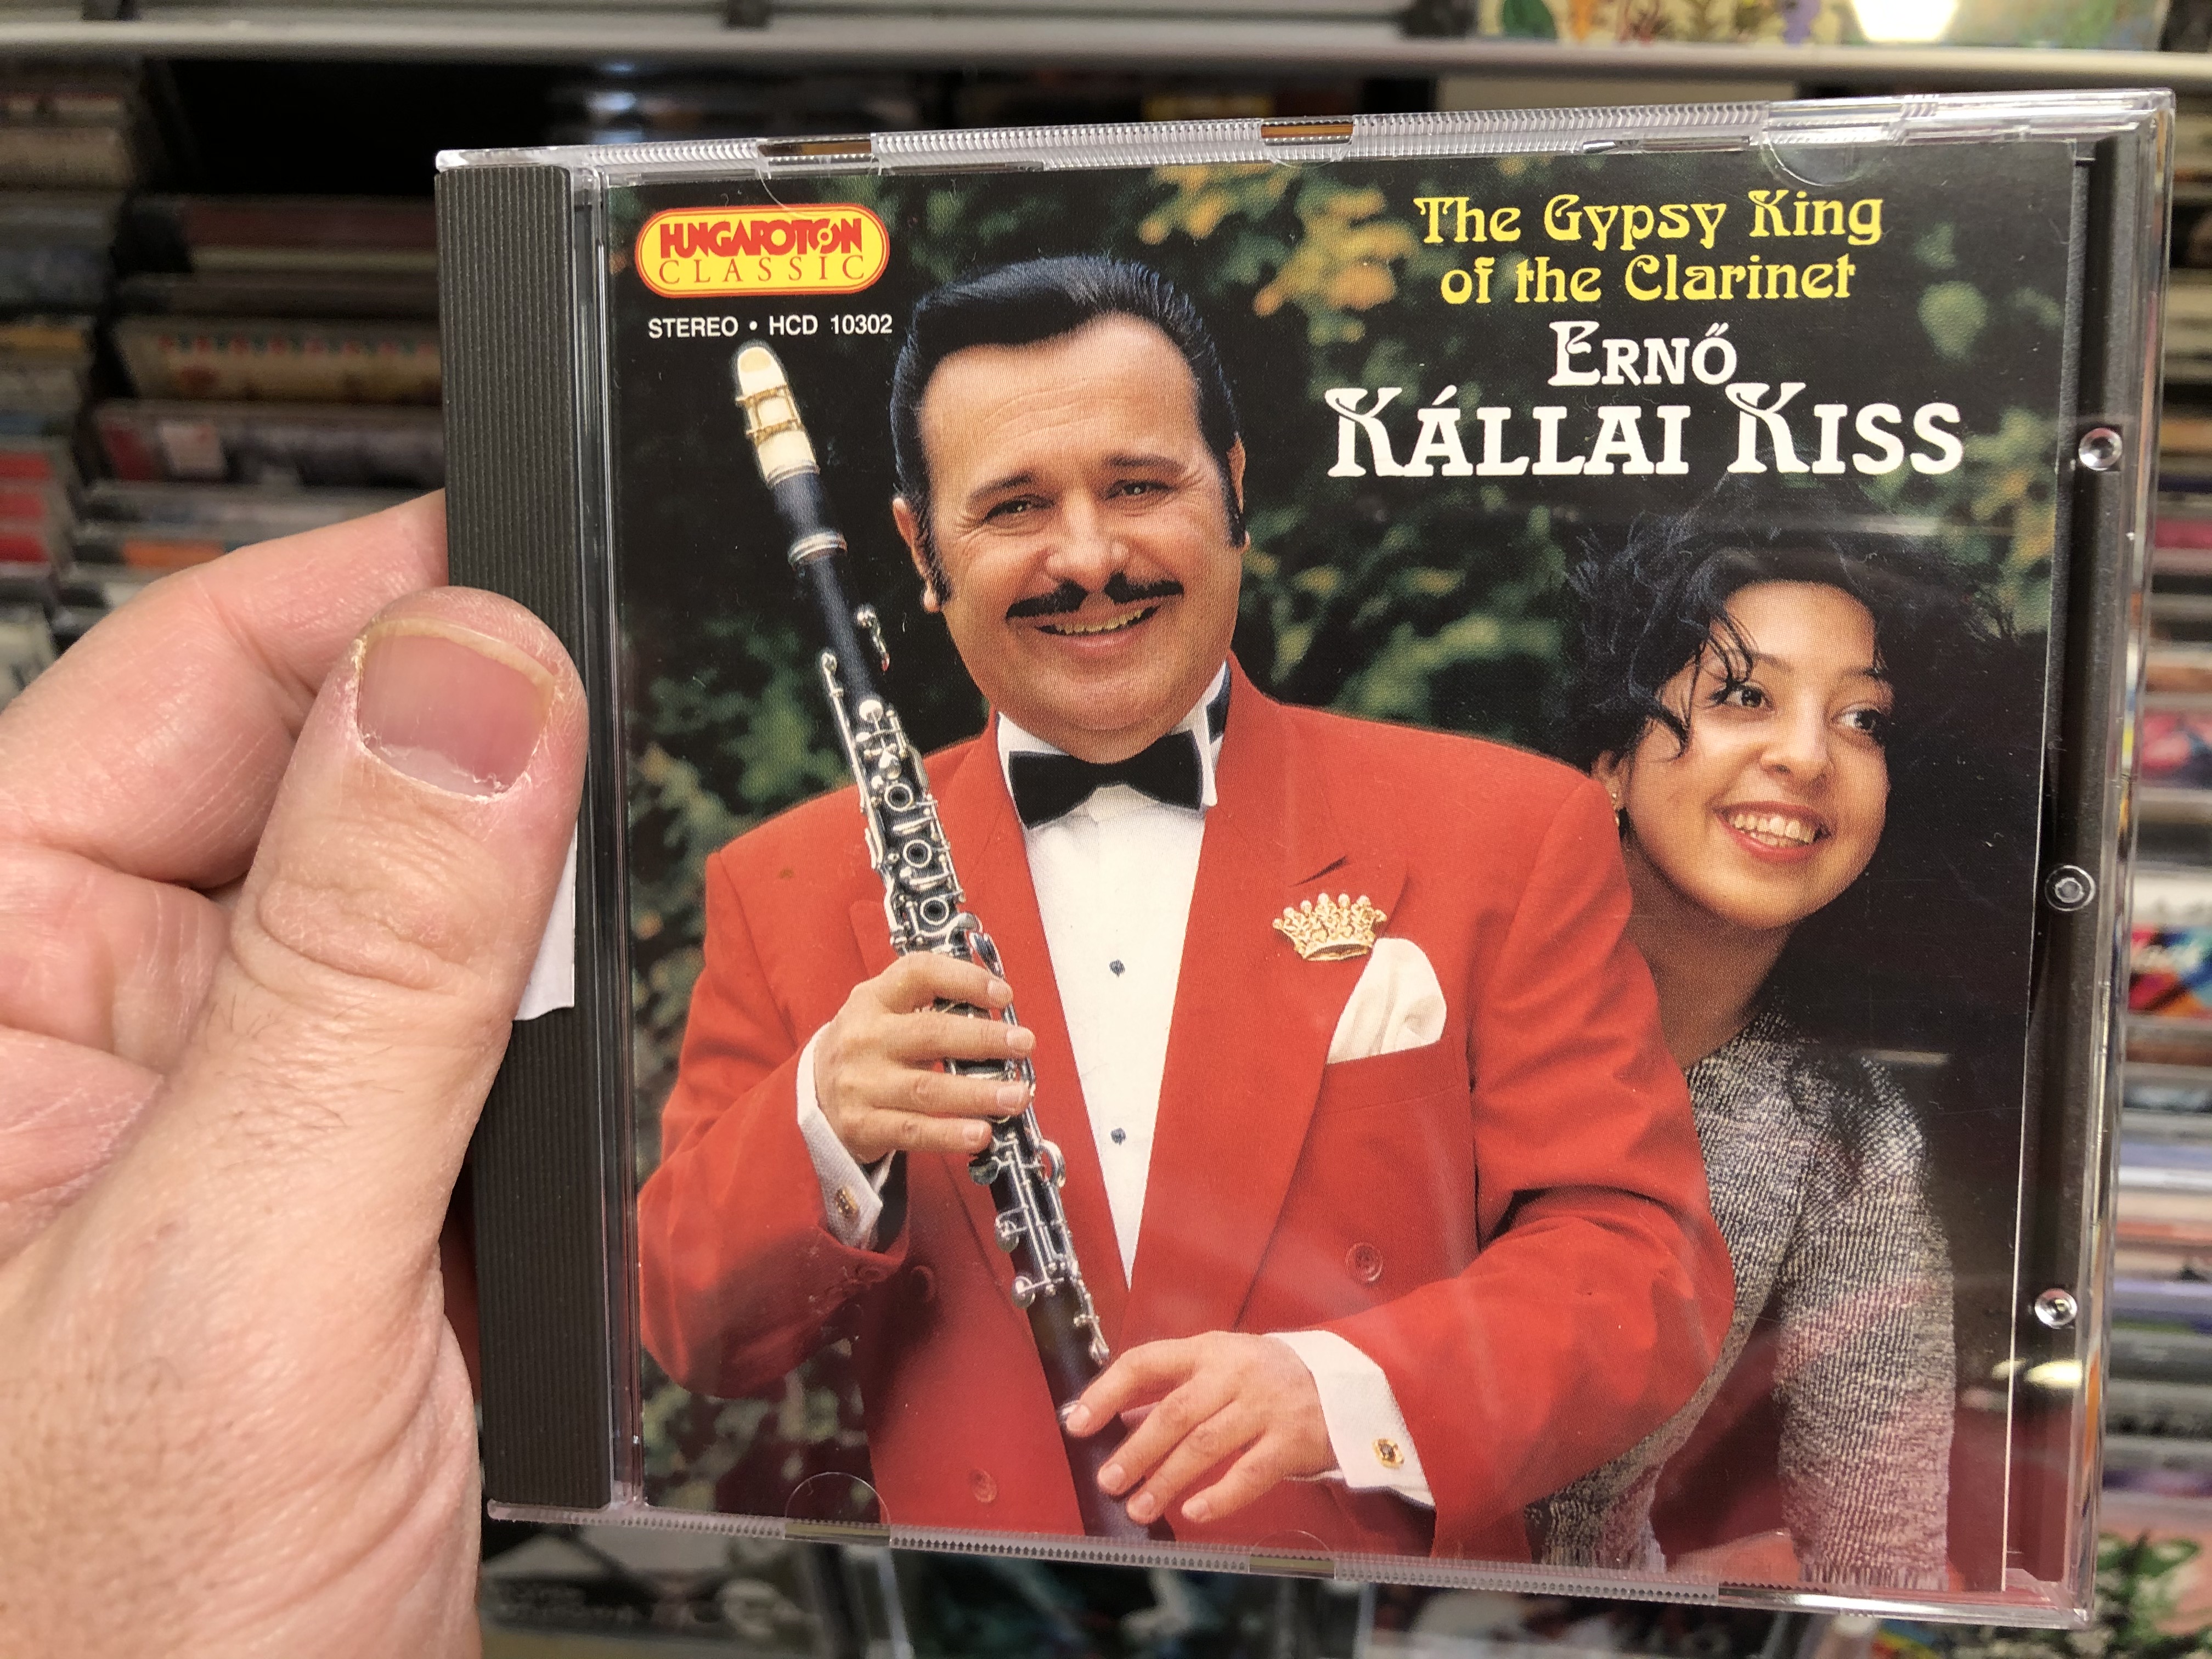 the-gypsy-king-of-the-clarinet-ern-k-llai-kiss-hungaroton-classic-audio-cd-1995-stereo-hcd-10302-1-.jpg